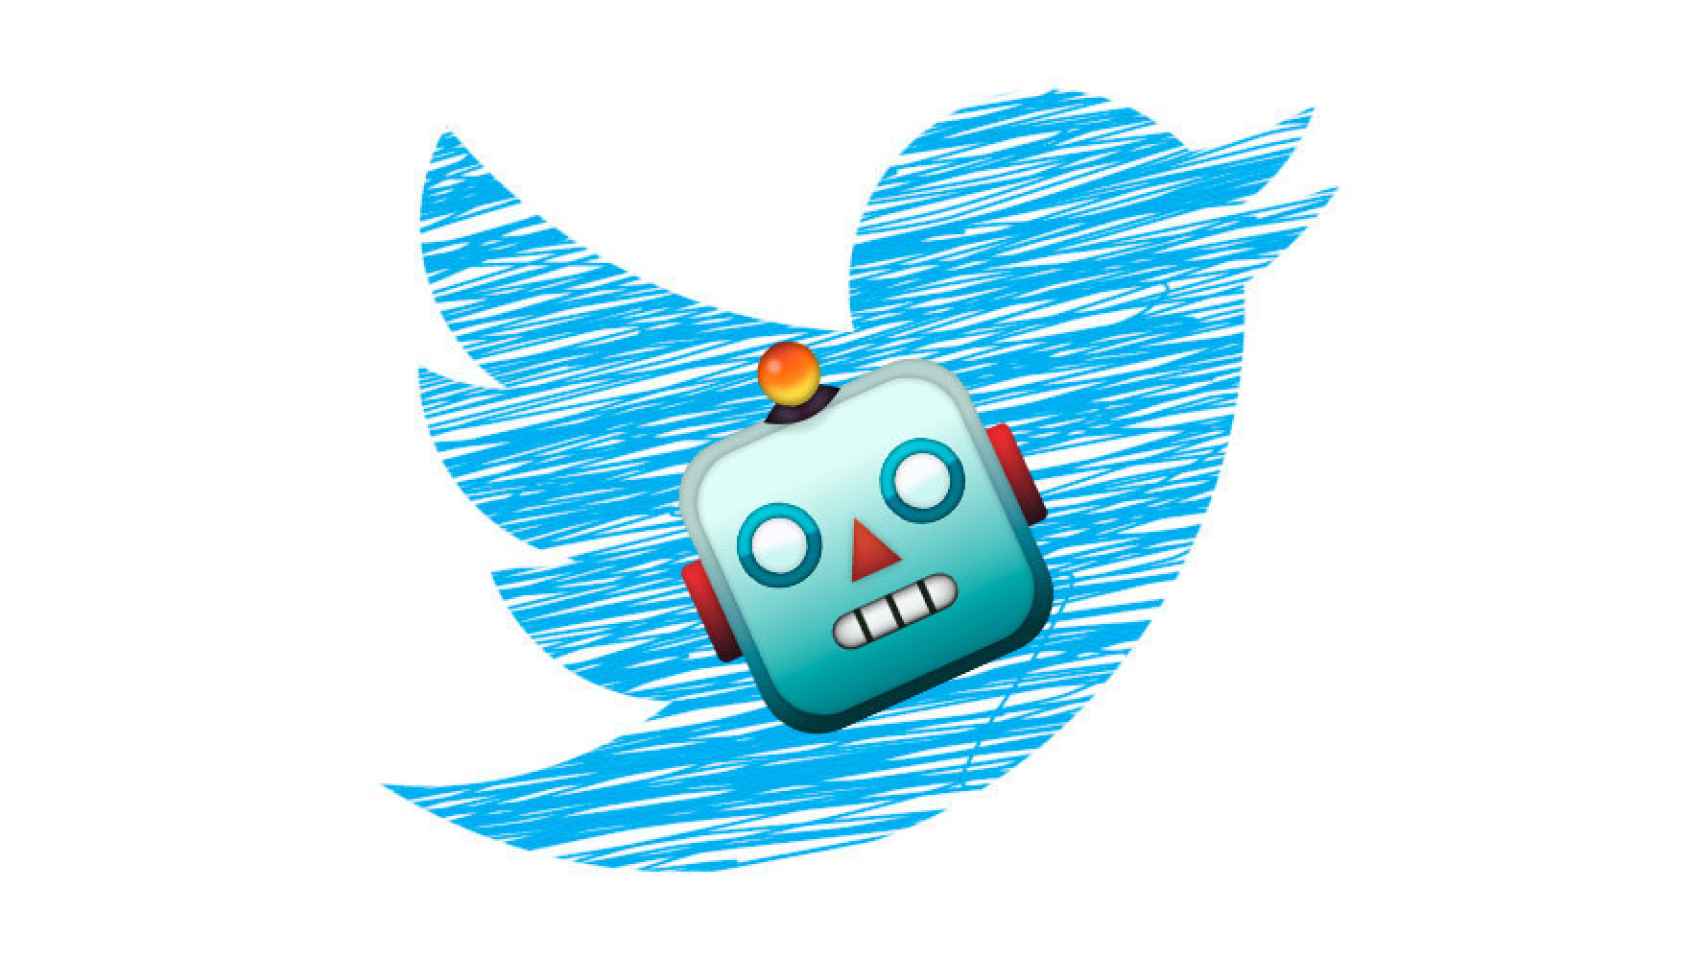 twitter-bots